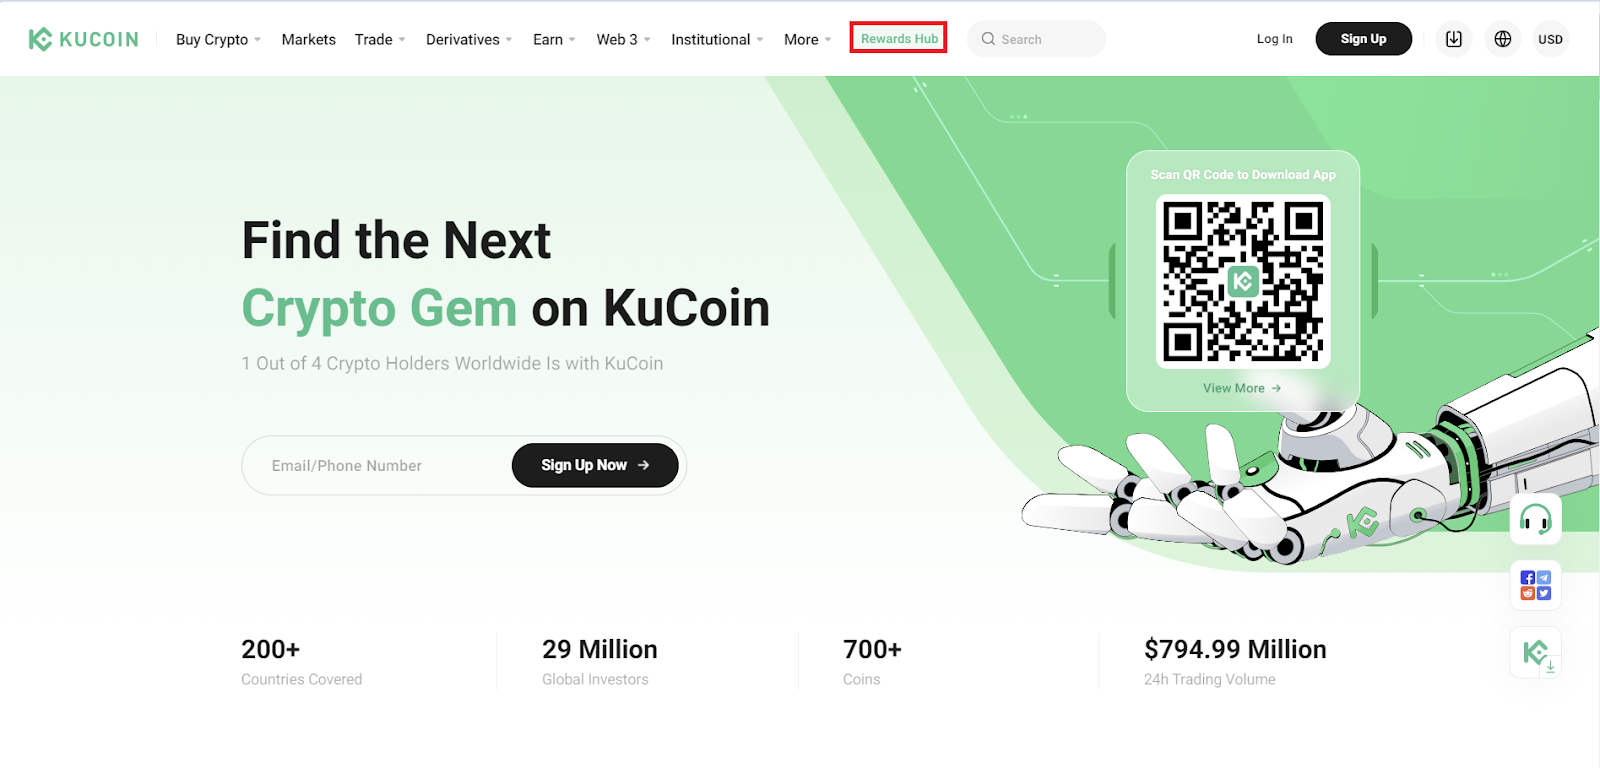 Best Kucoin Referral Code (March ): $ USDT Signup Bonus